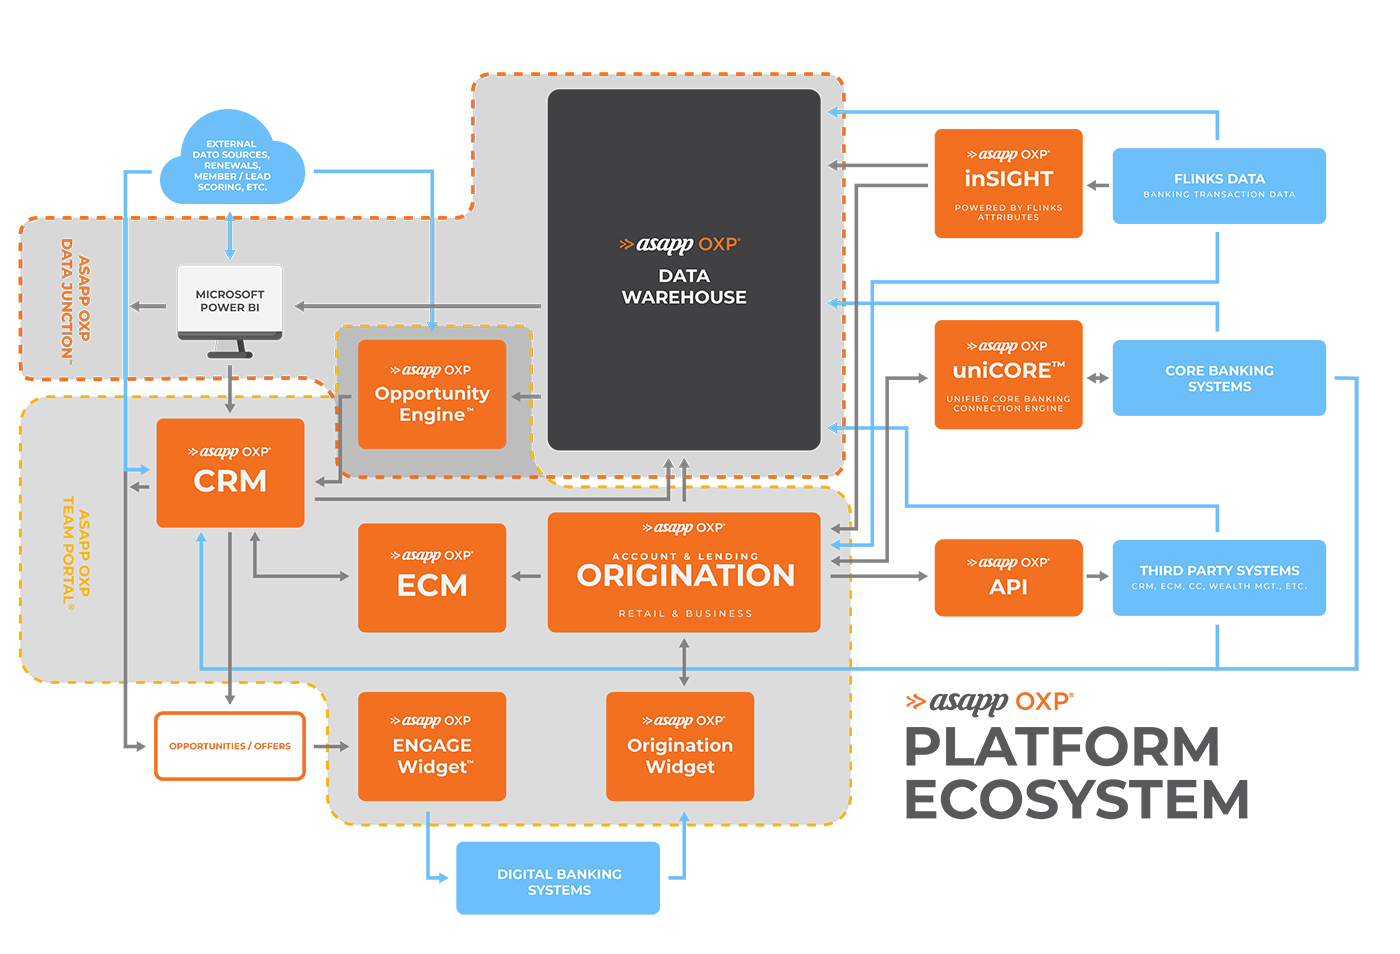 ASAPP OXP Platform Ecosystem